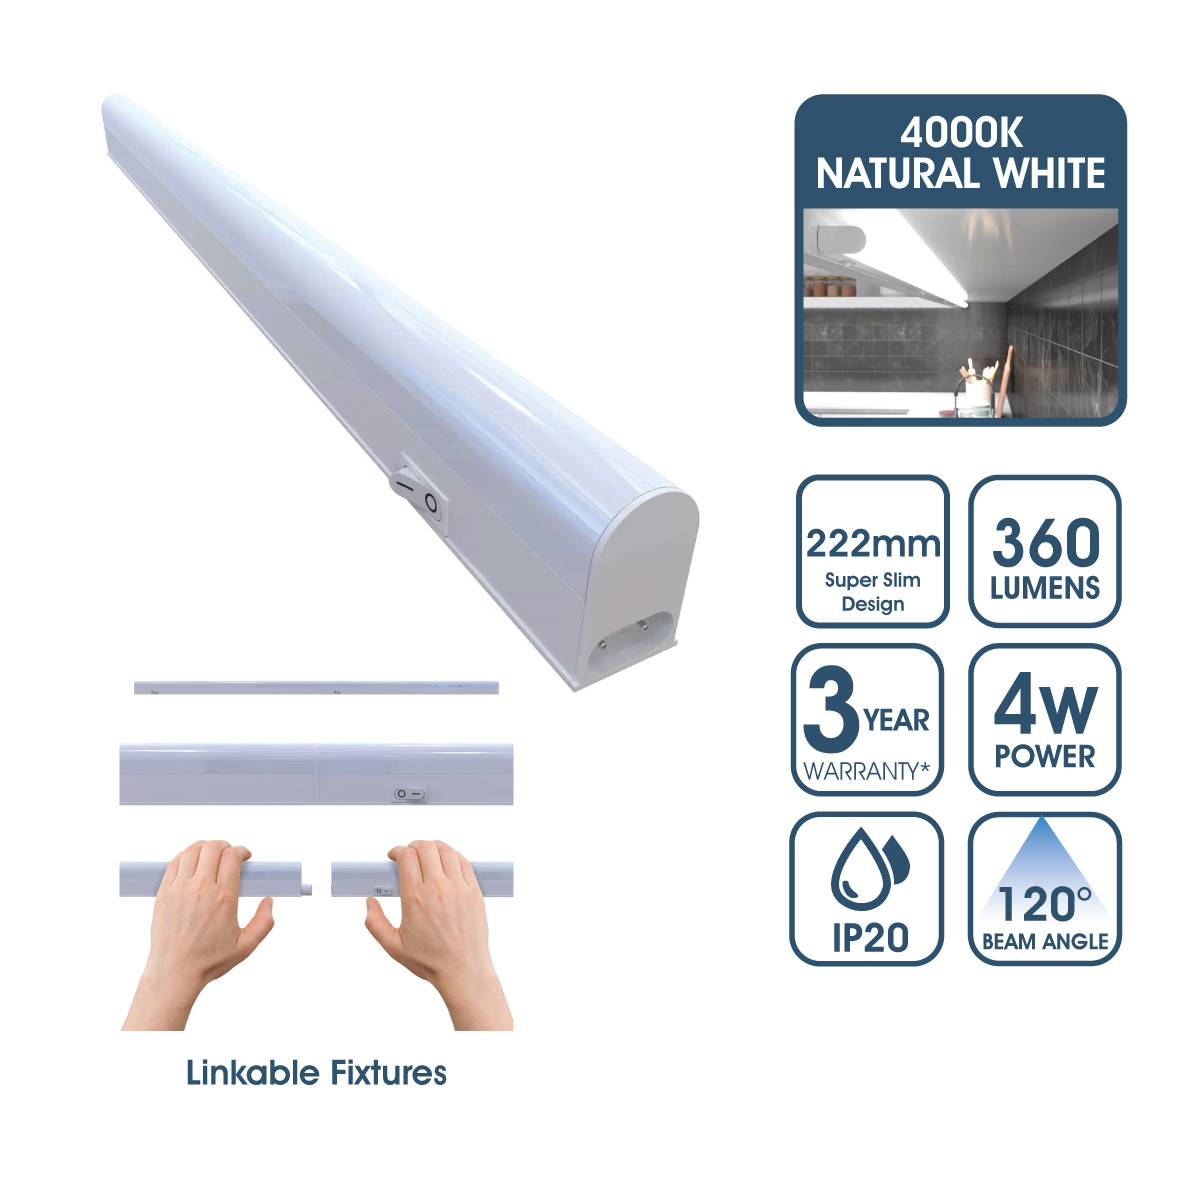 View 222mm Linkable LED Ultraslim Under Cabinet Light Fitting Natural White information